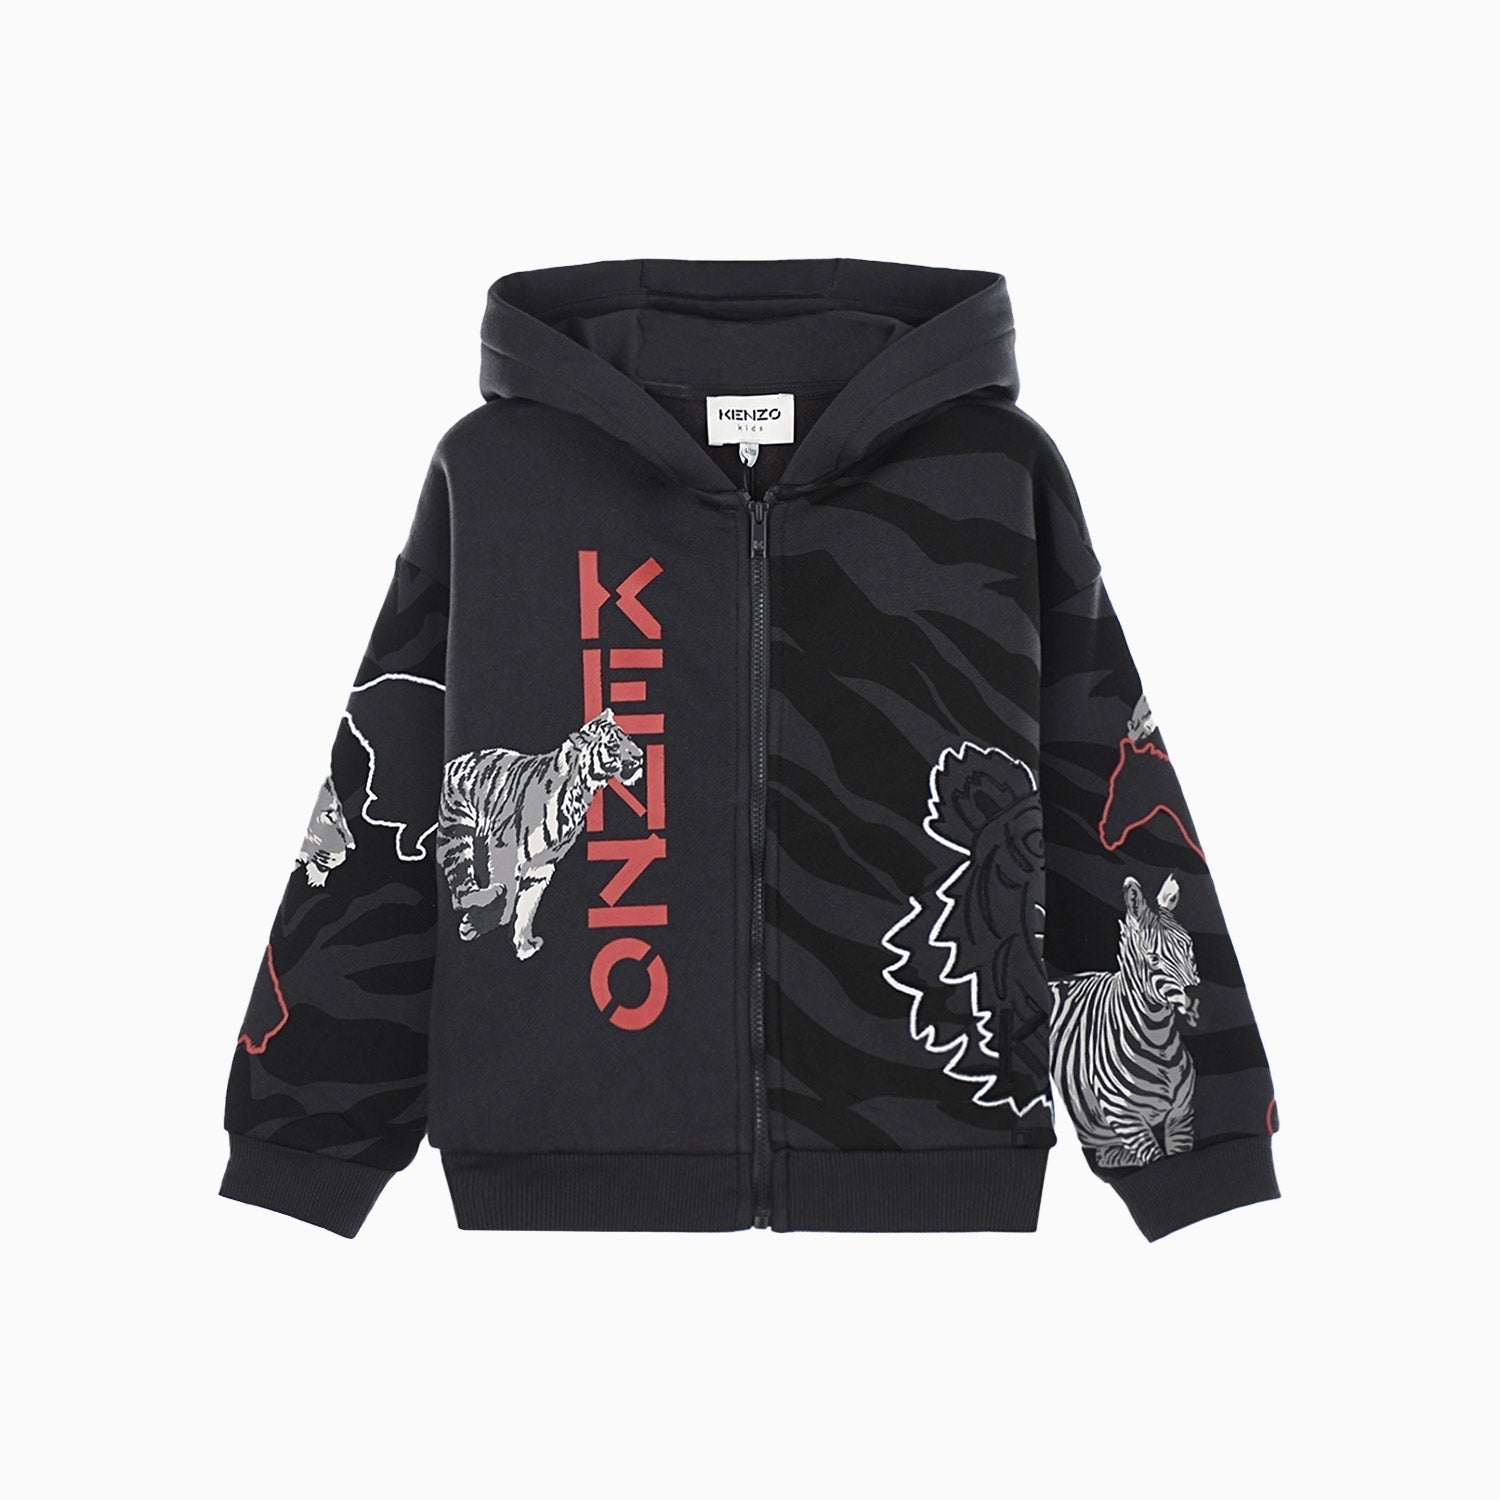 Kenzo Kid's Animal Print Outfit - Color: Dark Grey - Kids Premium Clothing -